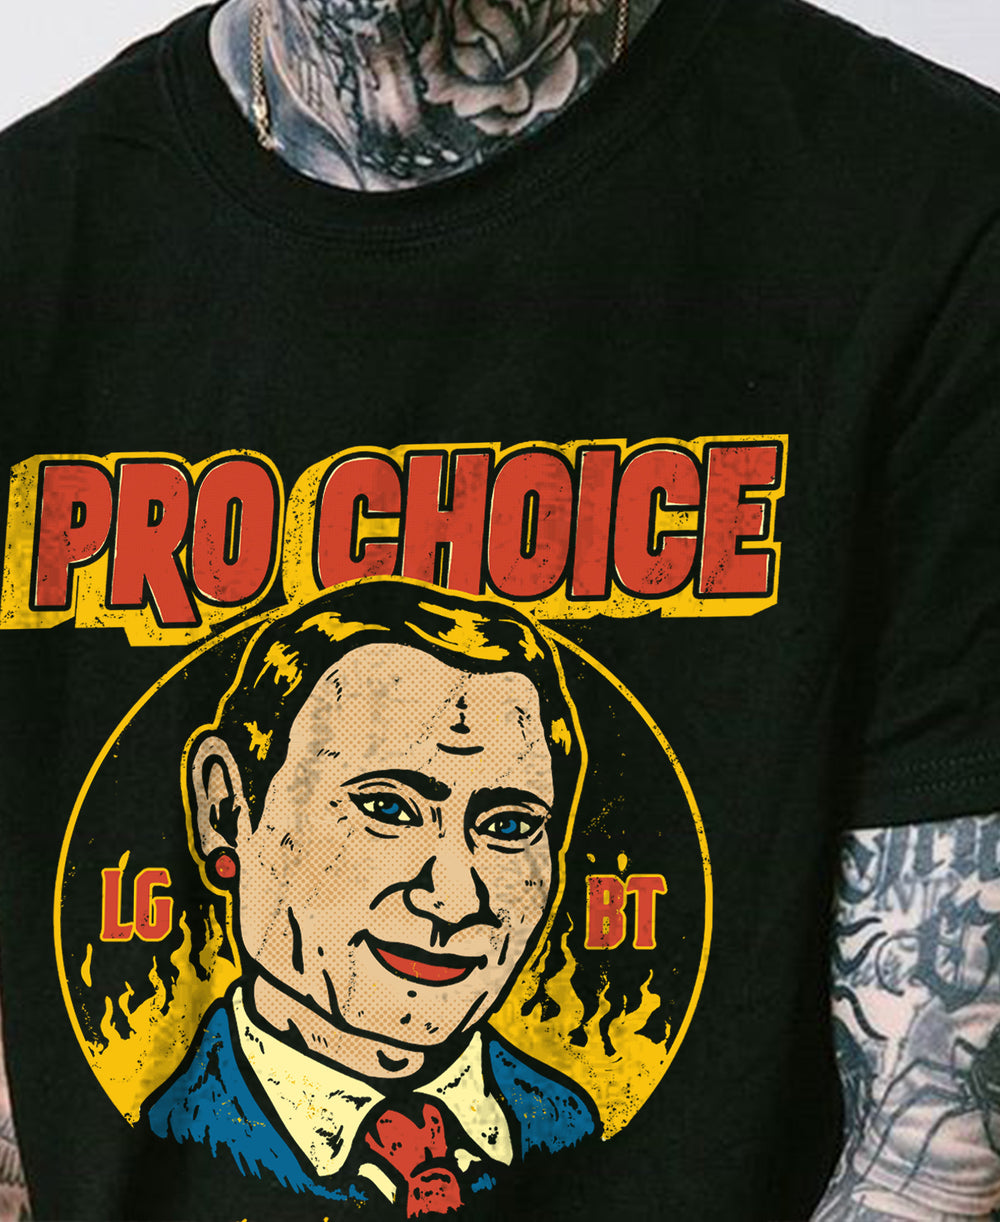 Pro Choice Unisex Shirt, Vladimir Putin LGBT rights Funny Activism Unisex T-shirt Model